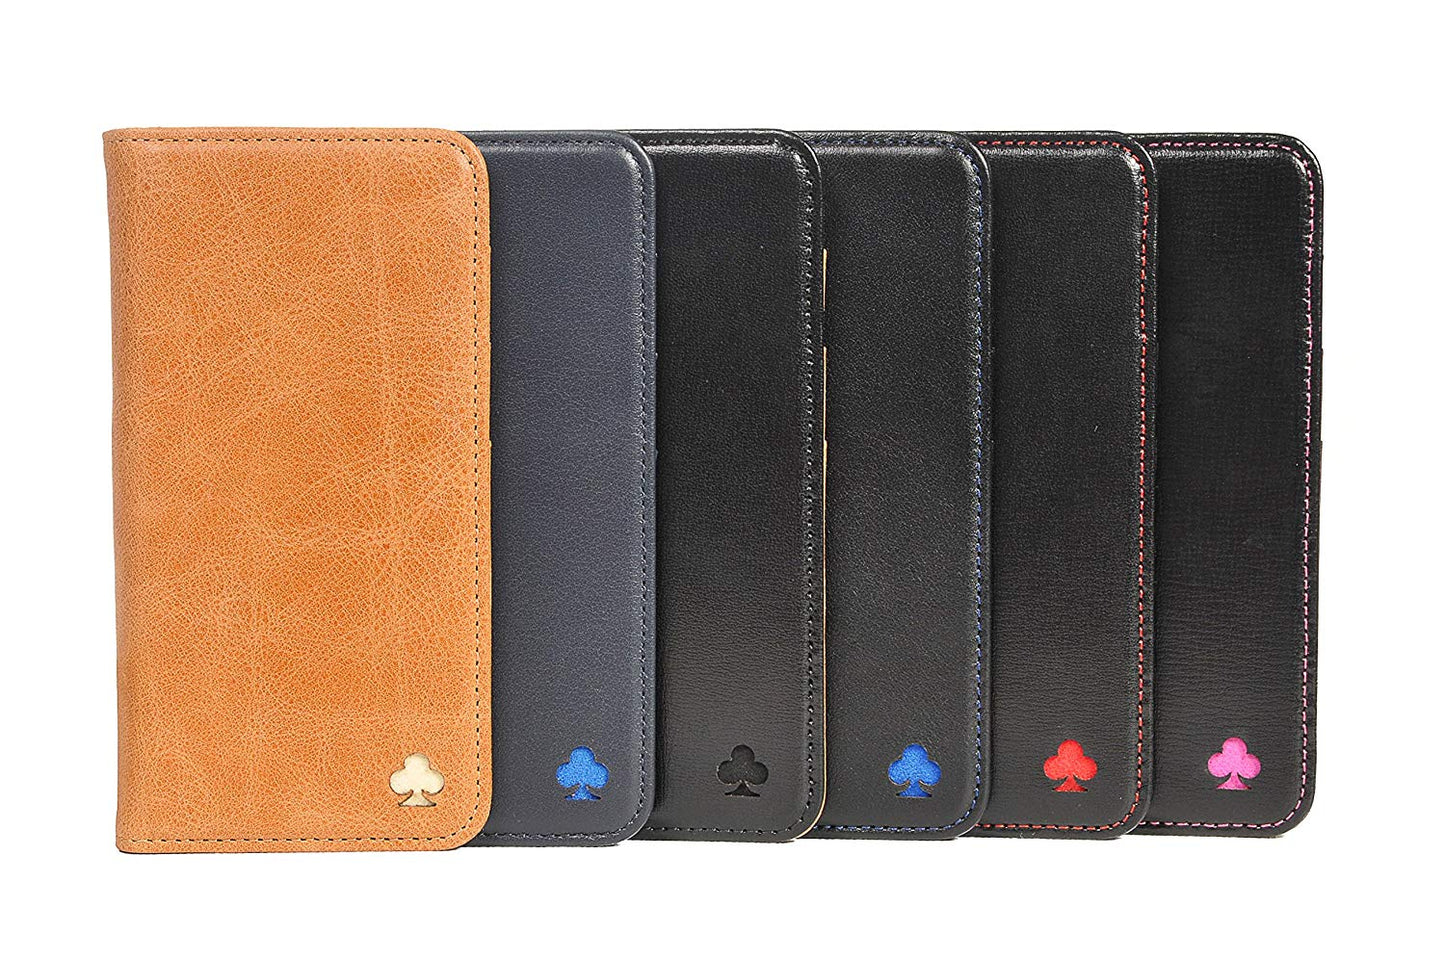 iPhone 7 Plus / 8 Plus Leather Case. Premium Slim Genuine Leather Stand Case/Cover/Wallet